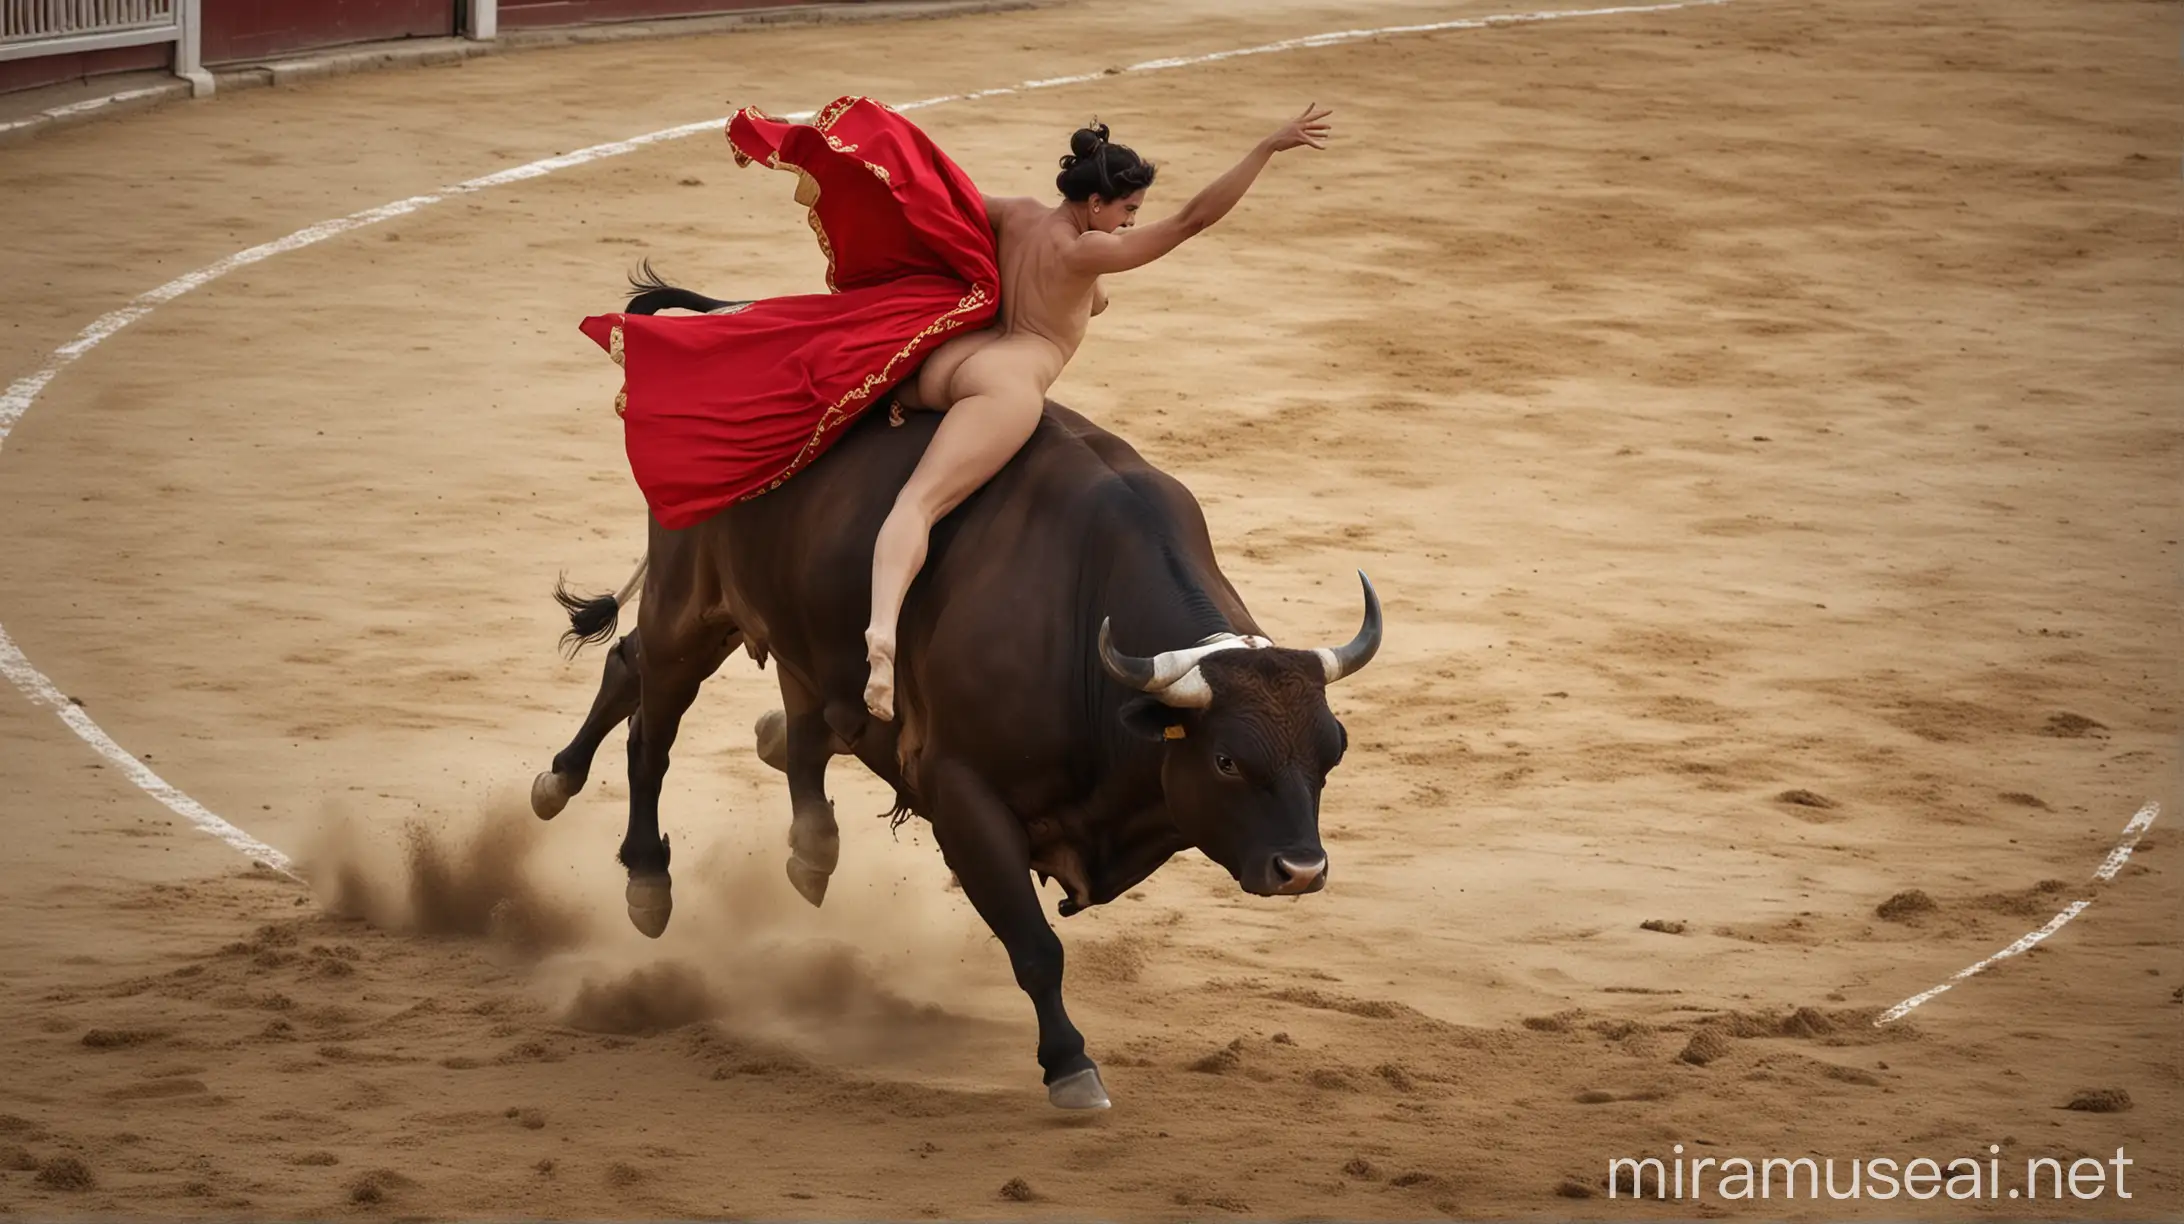 Dynamic Nude Spanish Bullfighter Leaps Over Charging Bull